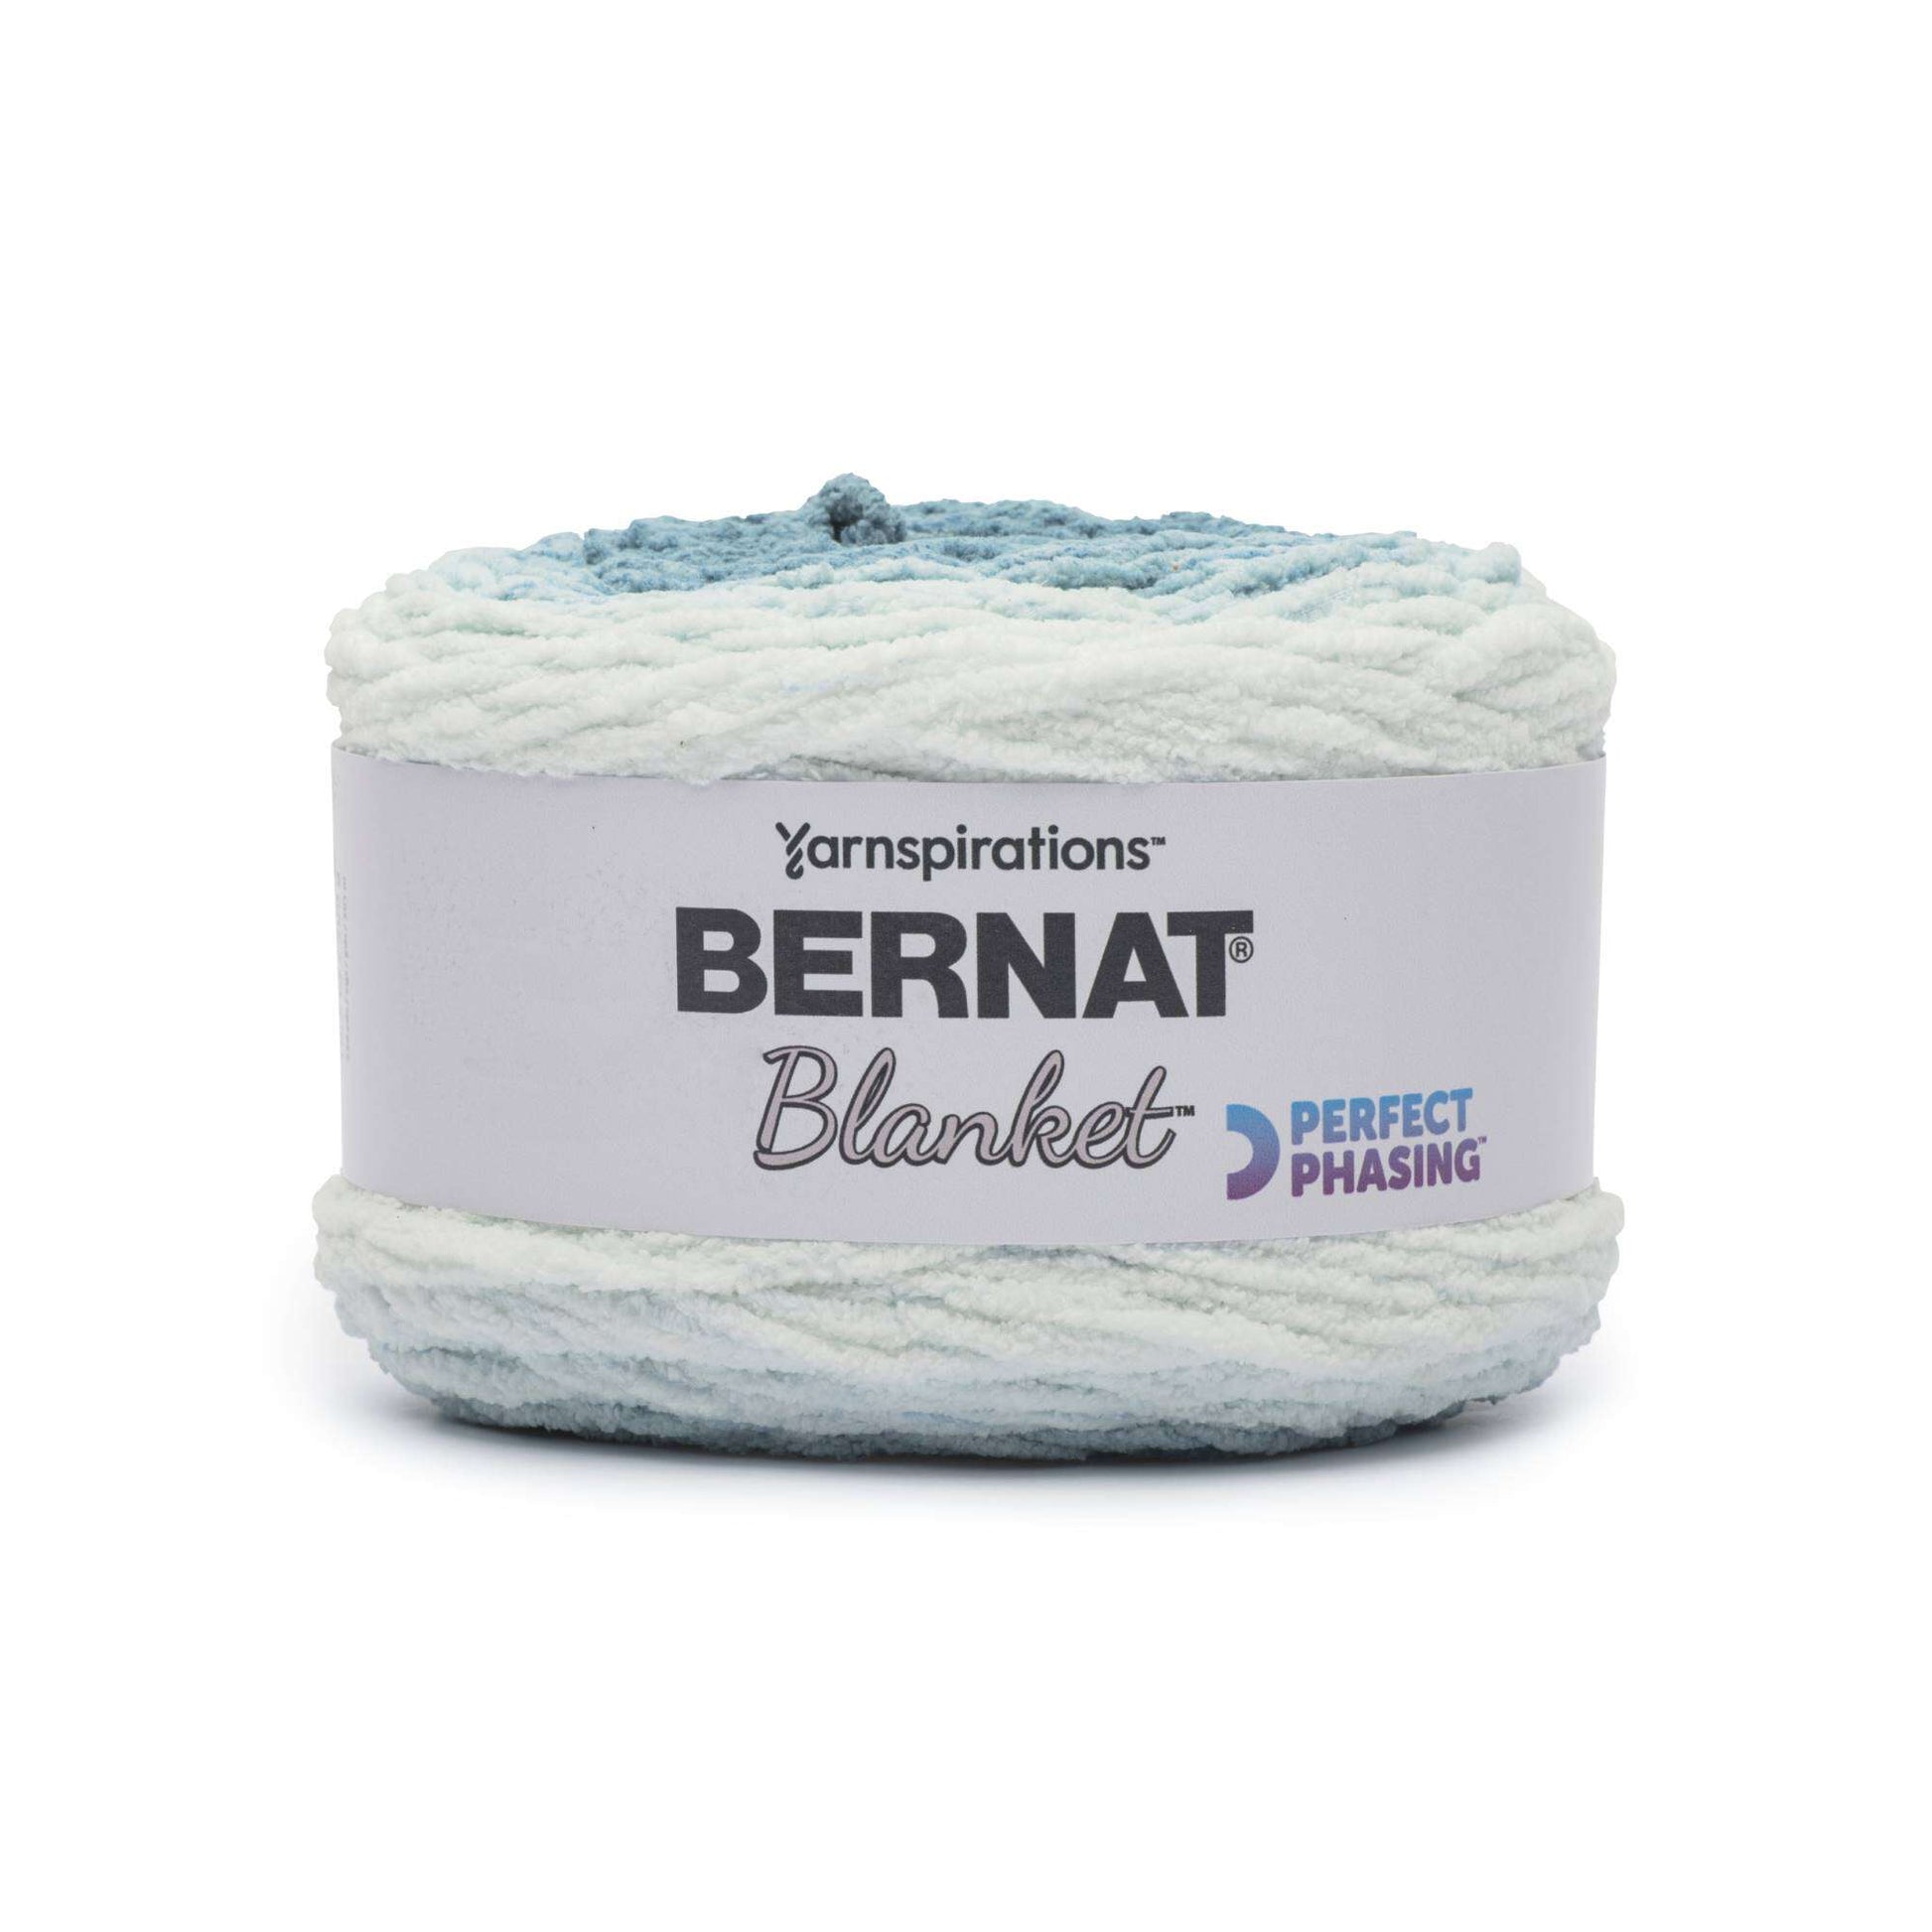 Bernat Blanket Perfect Phasing Yarn (300g/10.5oz) Deep Teal